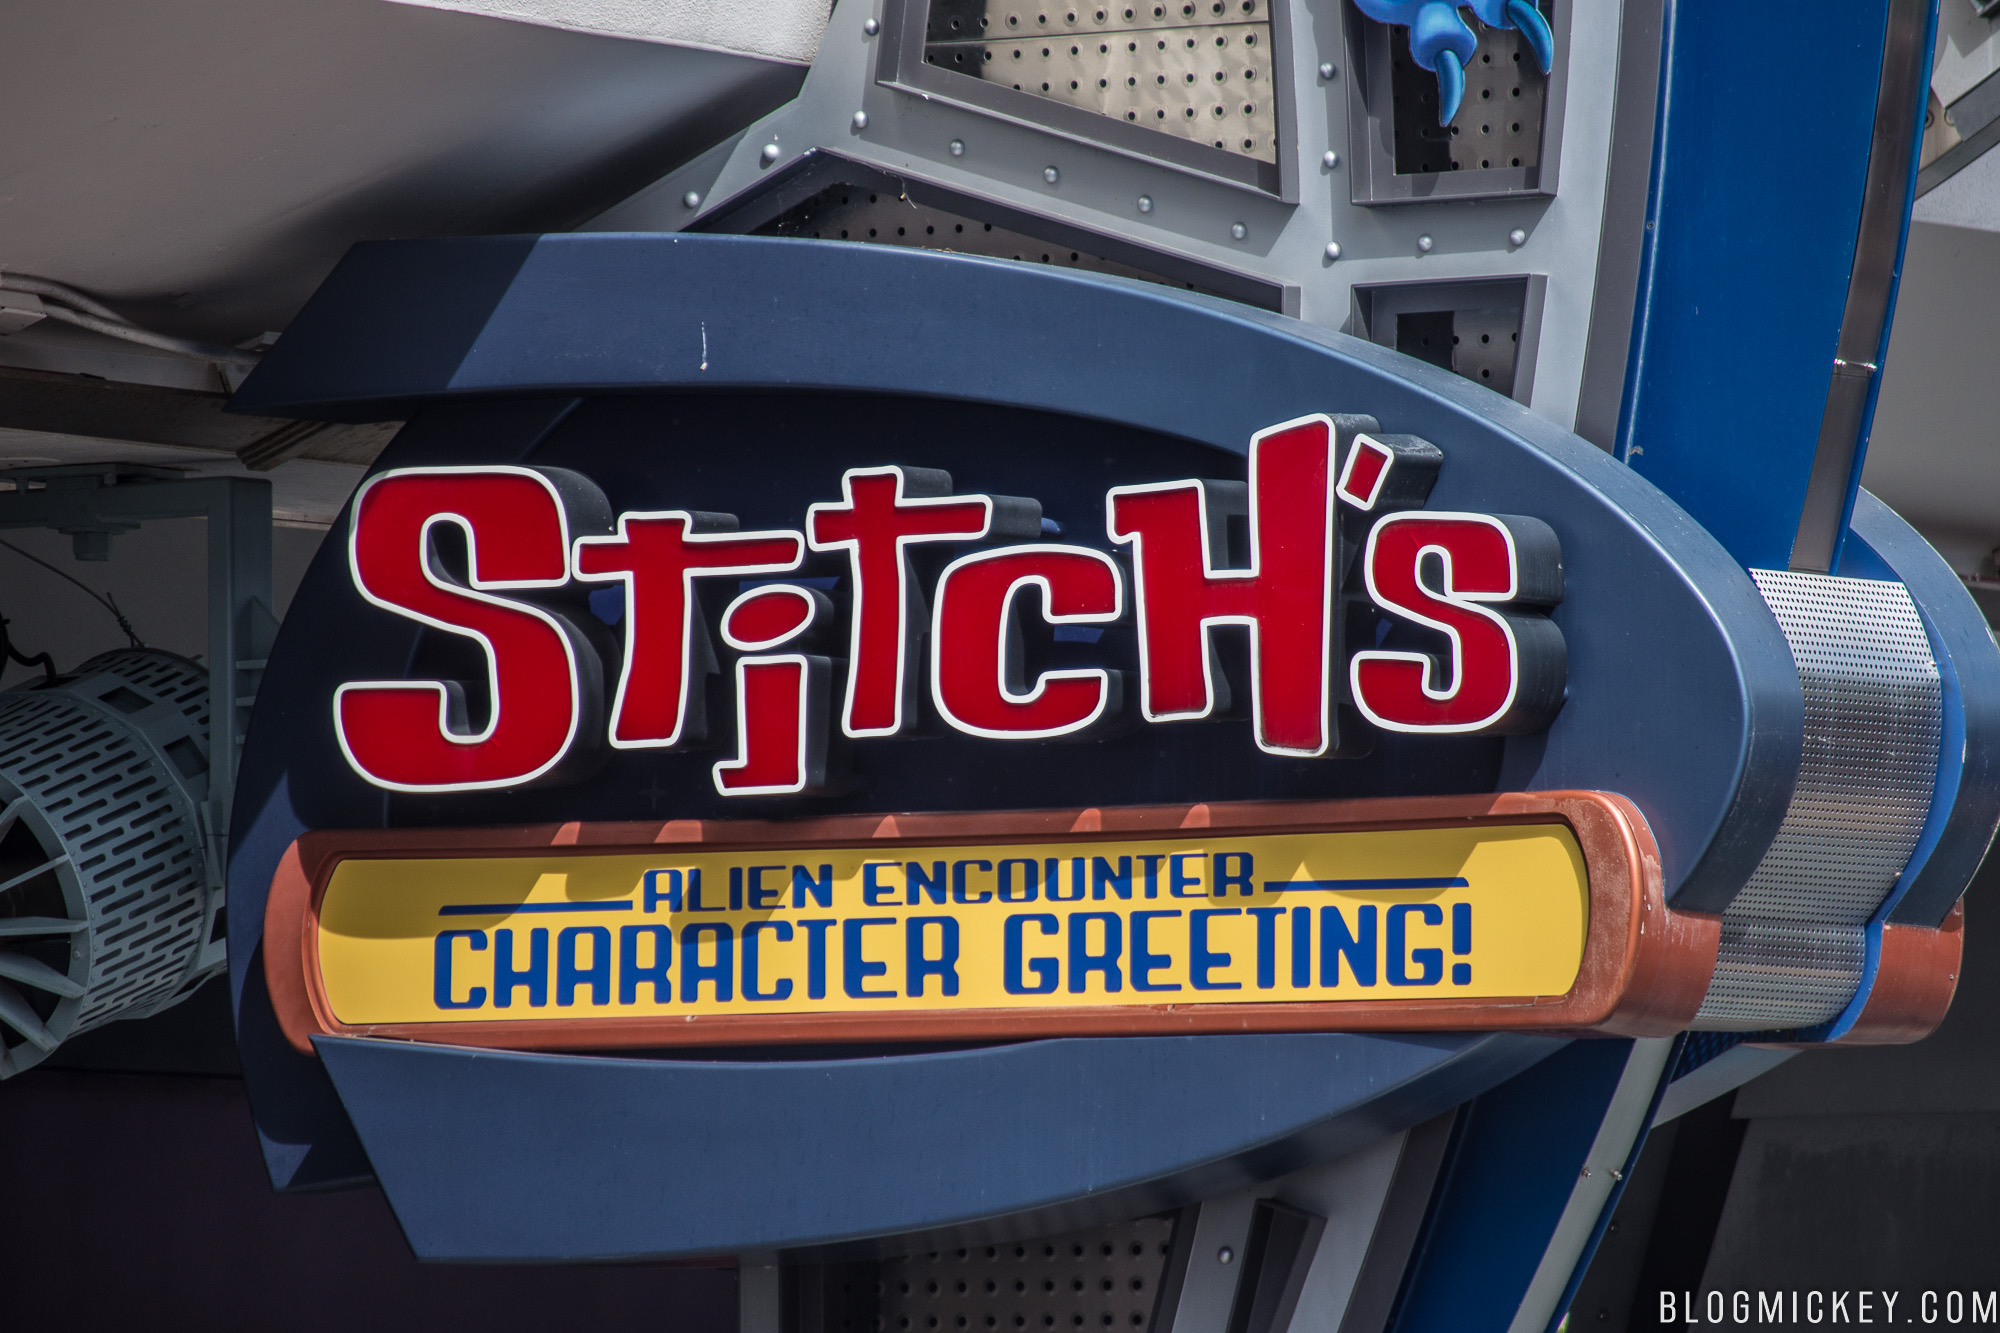 stitch-character-greeting-09302017-4.jpg